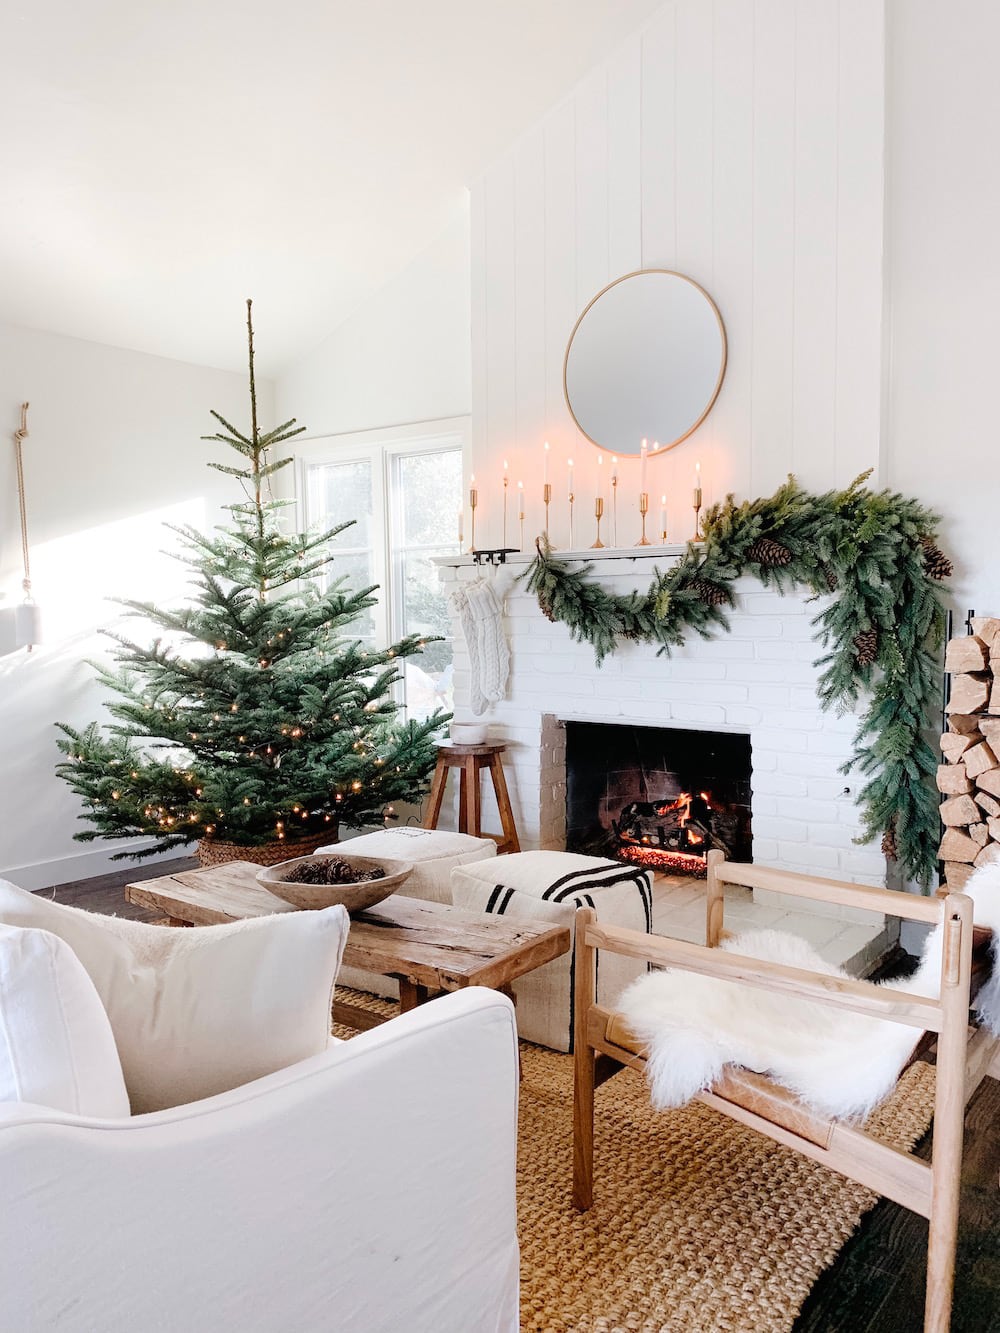 5 Helpful Minimalist Decorating Tips for Seasonal and Holiday